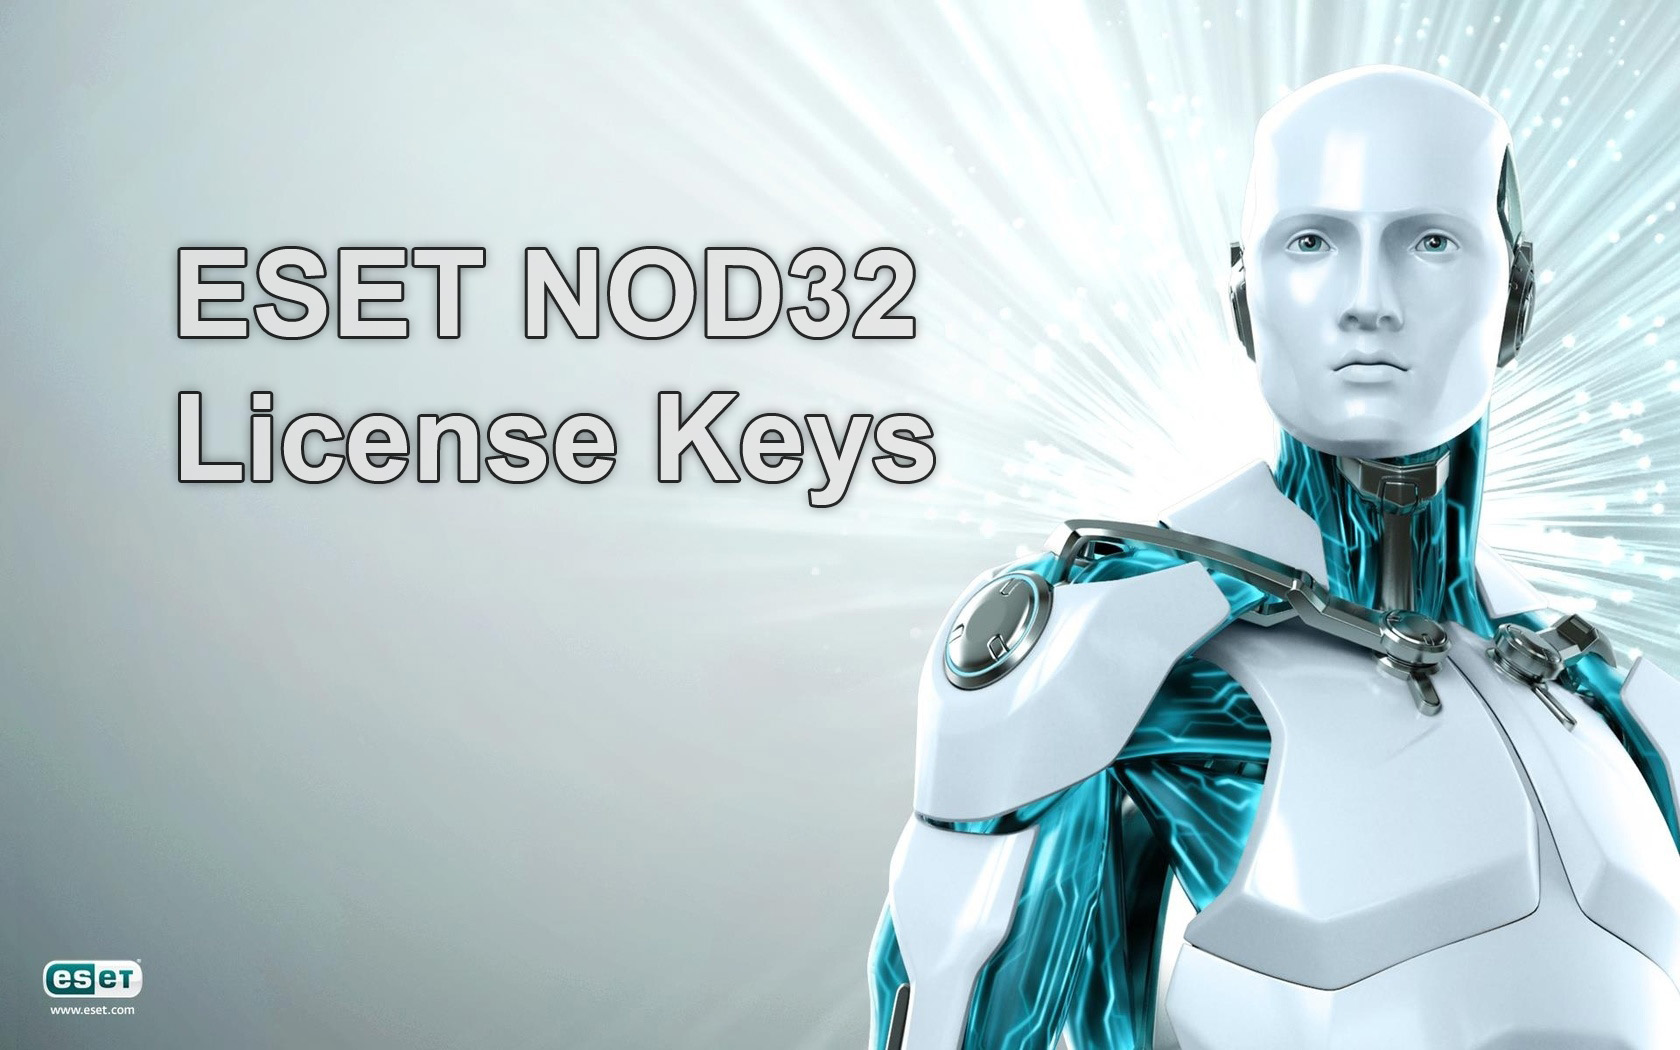 eset nod32 antivirus key 2022 free